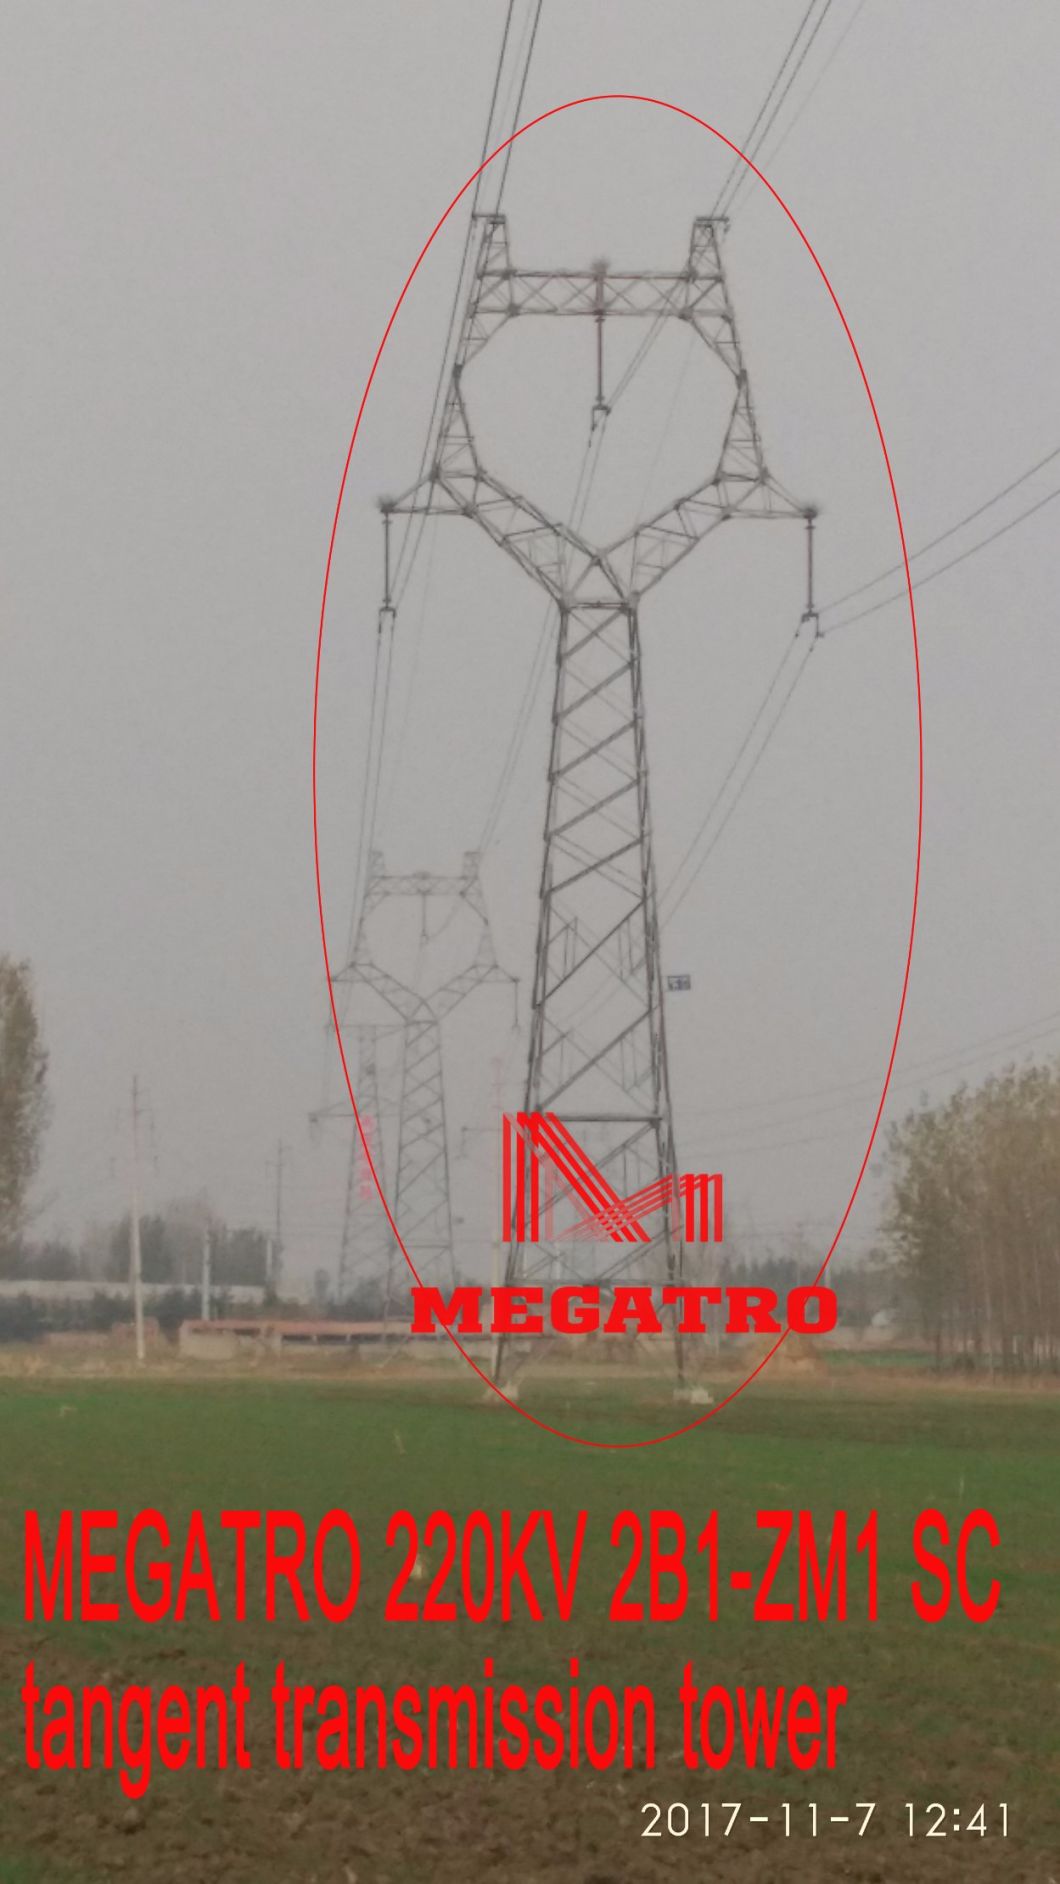 Megatro 220kv 2b1-Zm1 Sc Tangent Transmission Tower